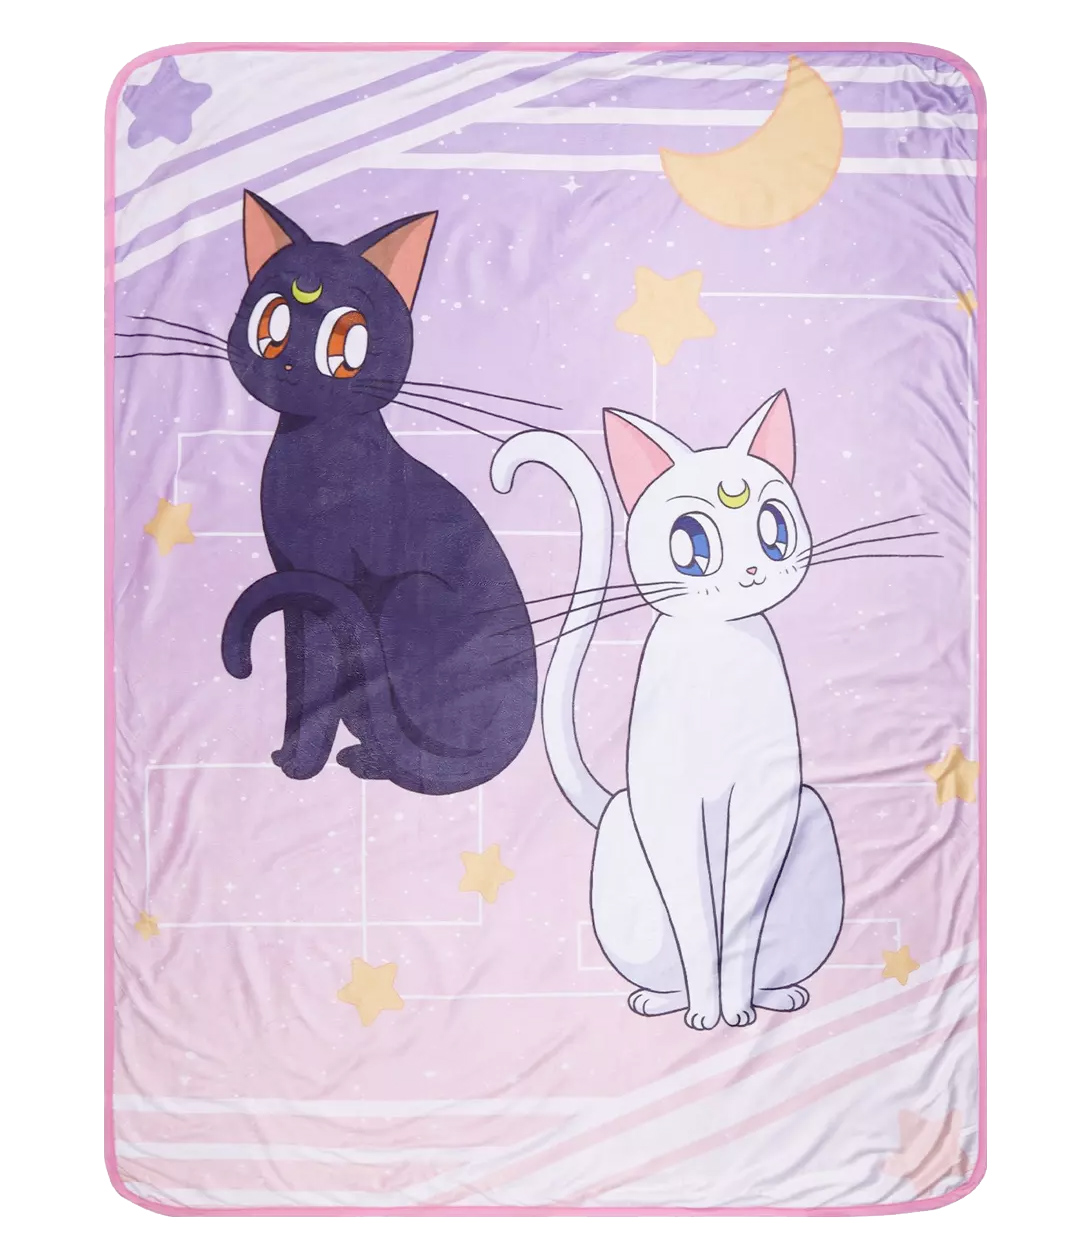 Cobertores de Lance Sailor Moon com as Sailor Guardians e a dupla Luna e Artemis 